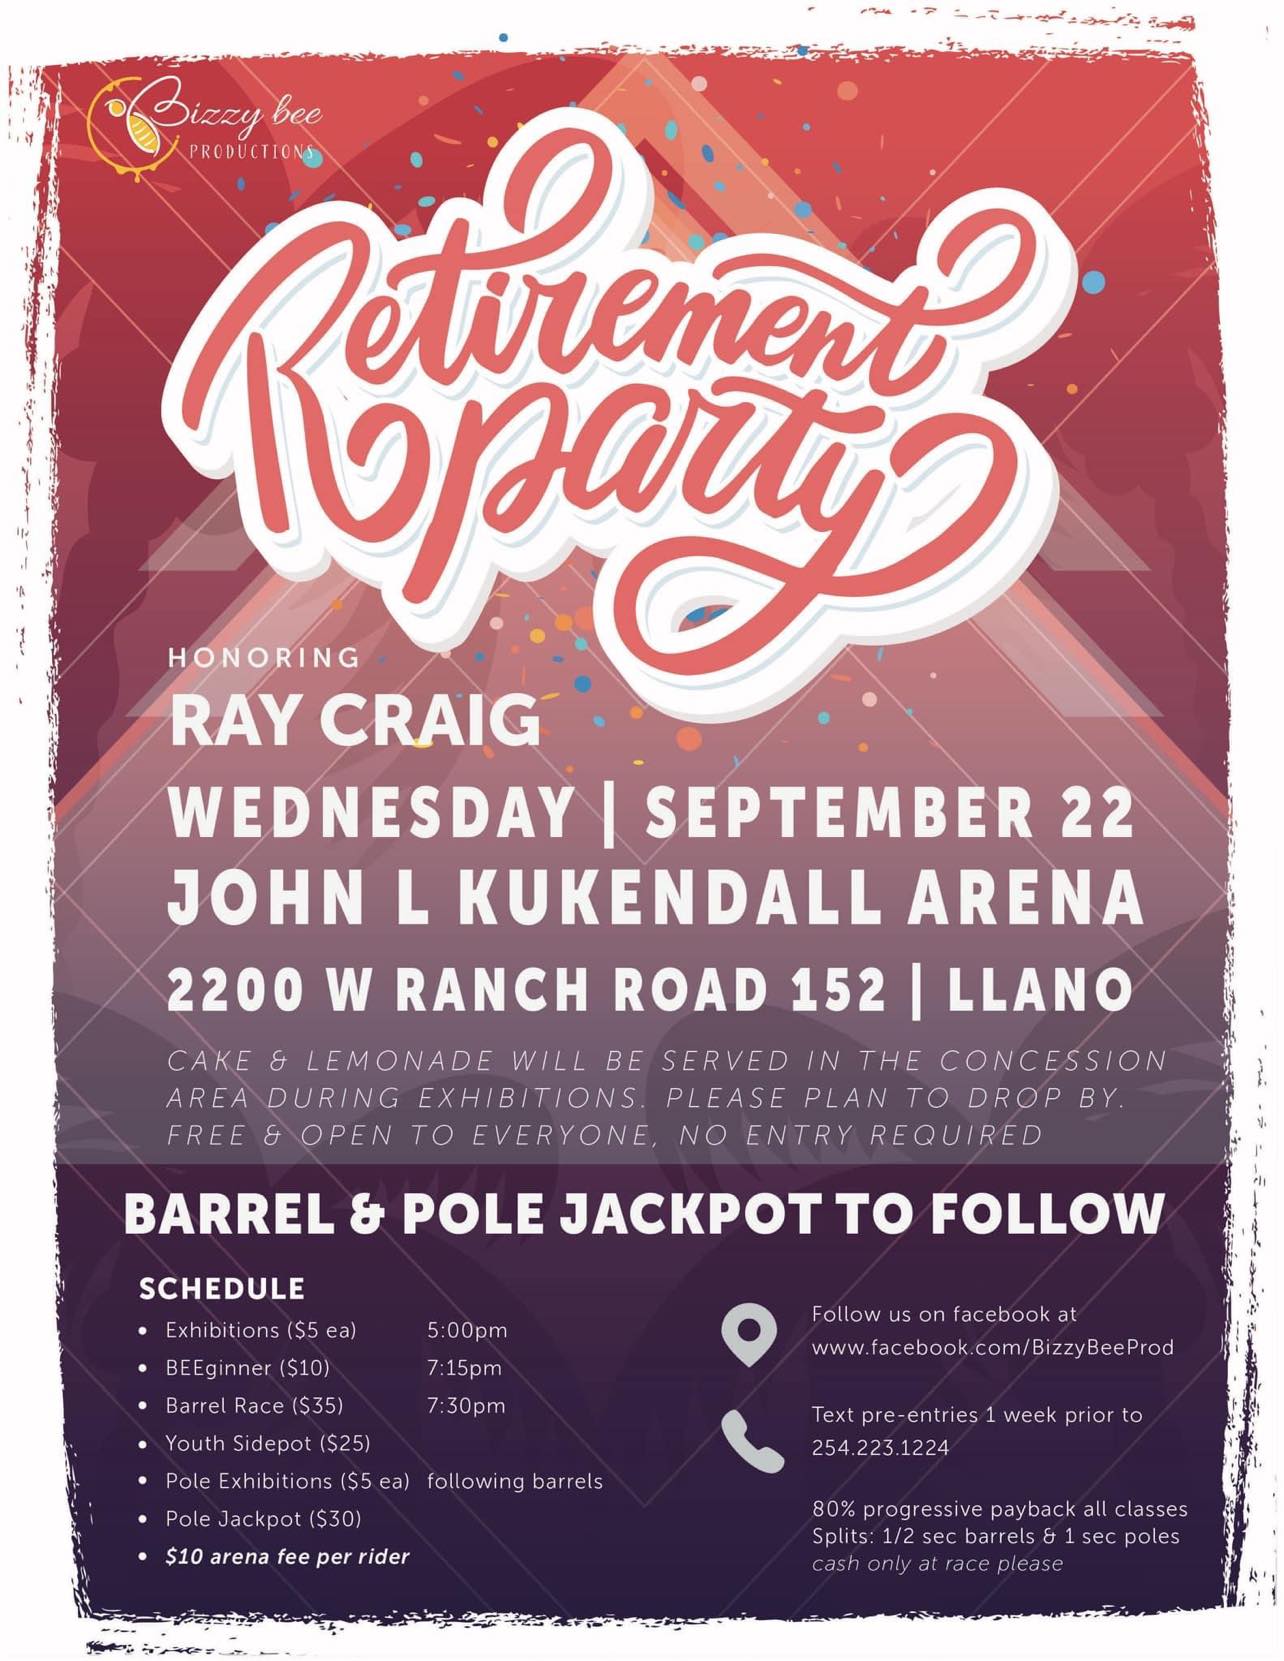 Wednesday at the JLK • 5D Barrel Jackpot